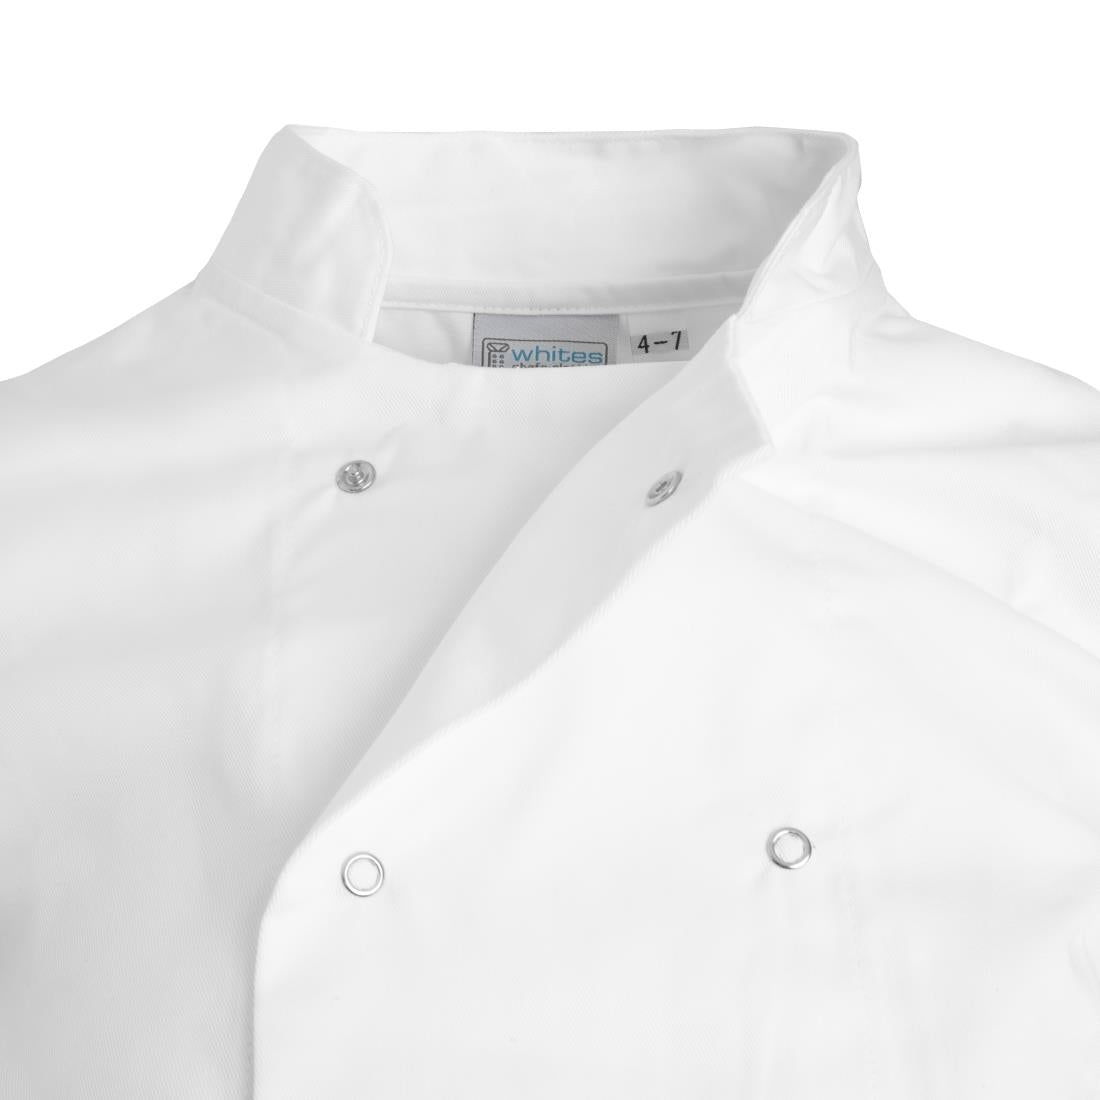 B124 Whites Childrens Unisex Chef Jacket White S JD Catering Equipment Solutions Ltd